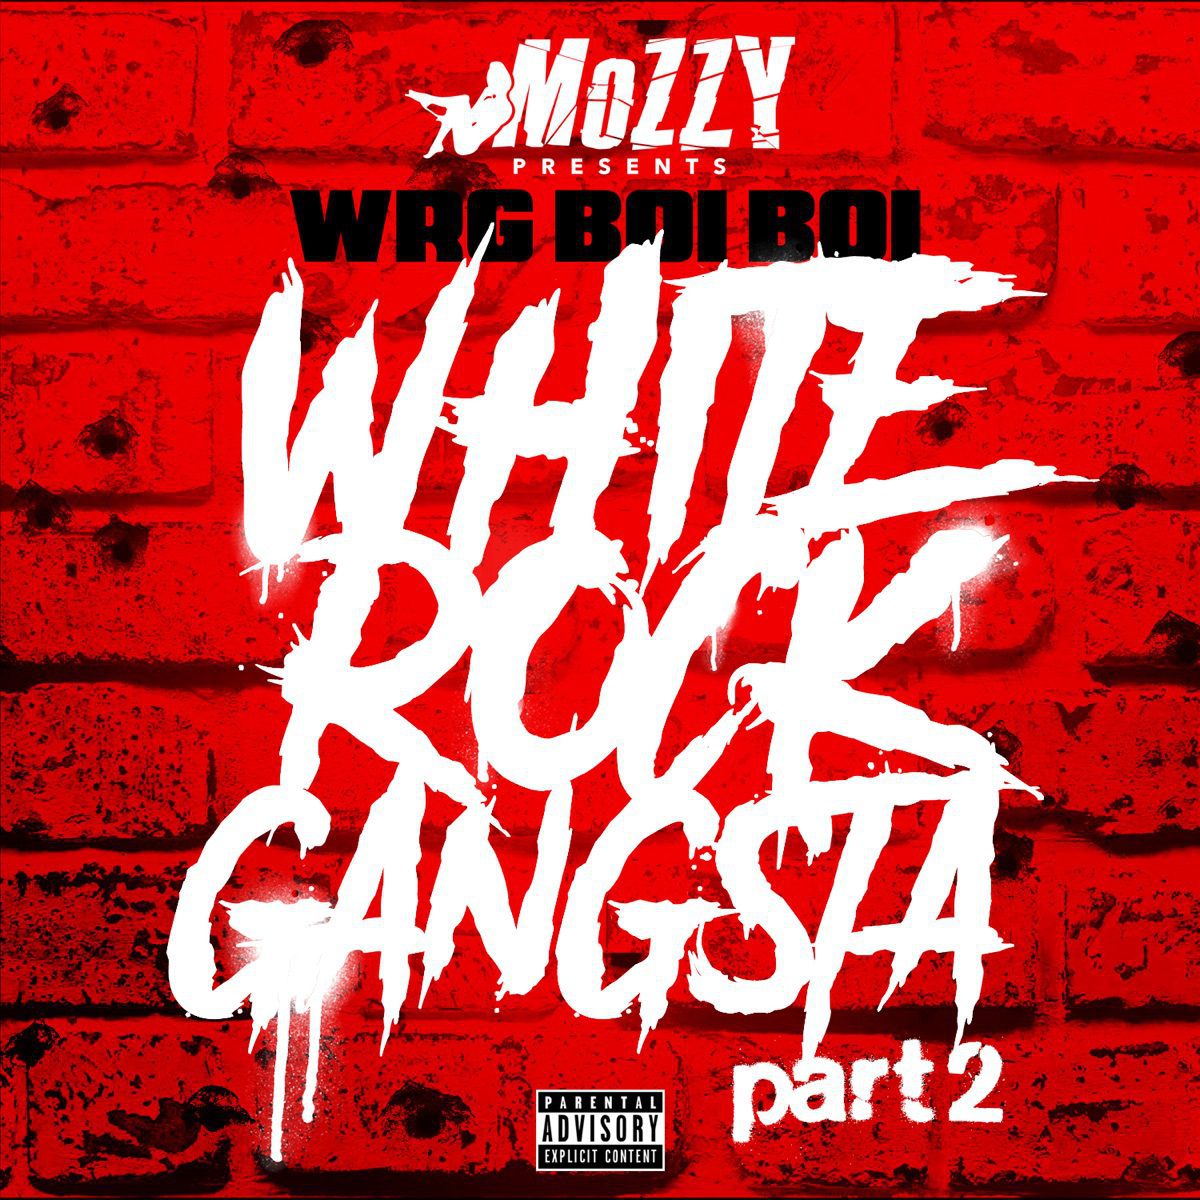 Wrg Boi Boi - White Rock Gangsta, Pt. 2